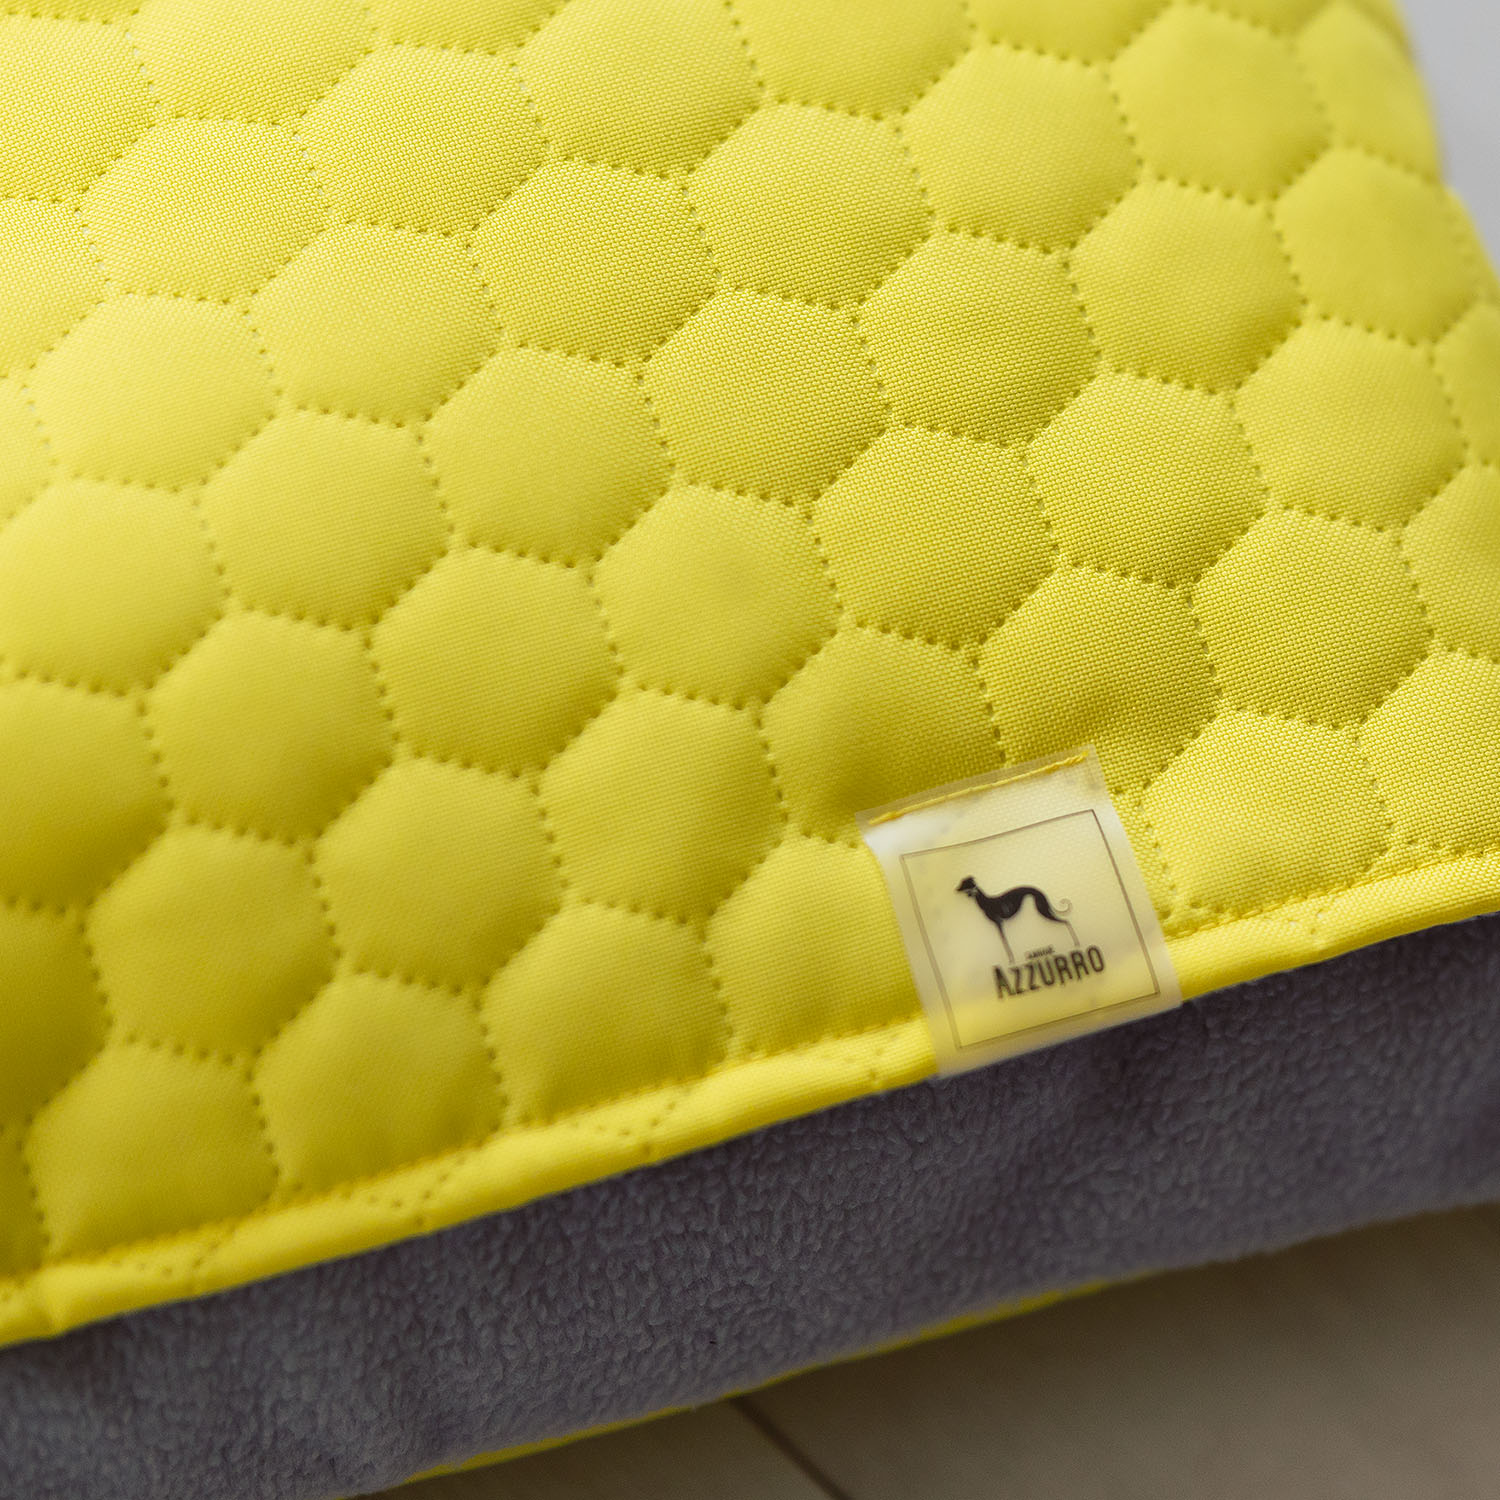 Iitalian greyhound bed Neon Yellow waterproof - Sangue Azzurro image 4